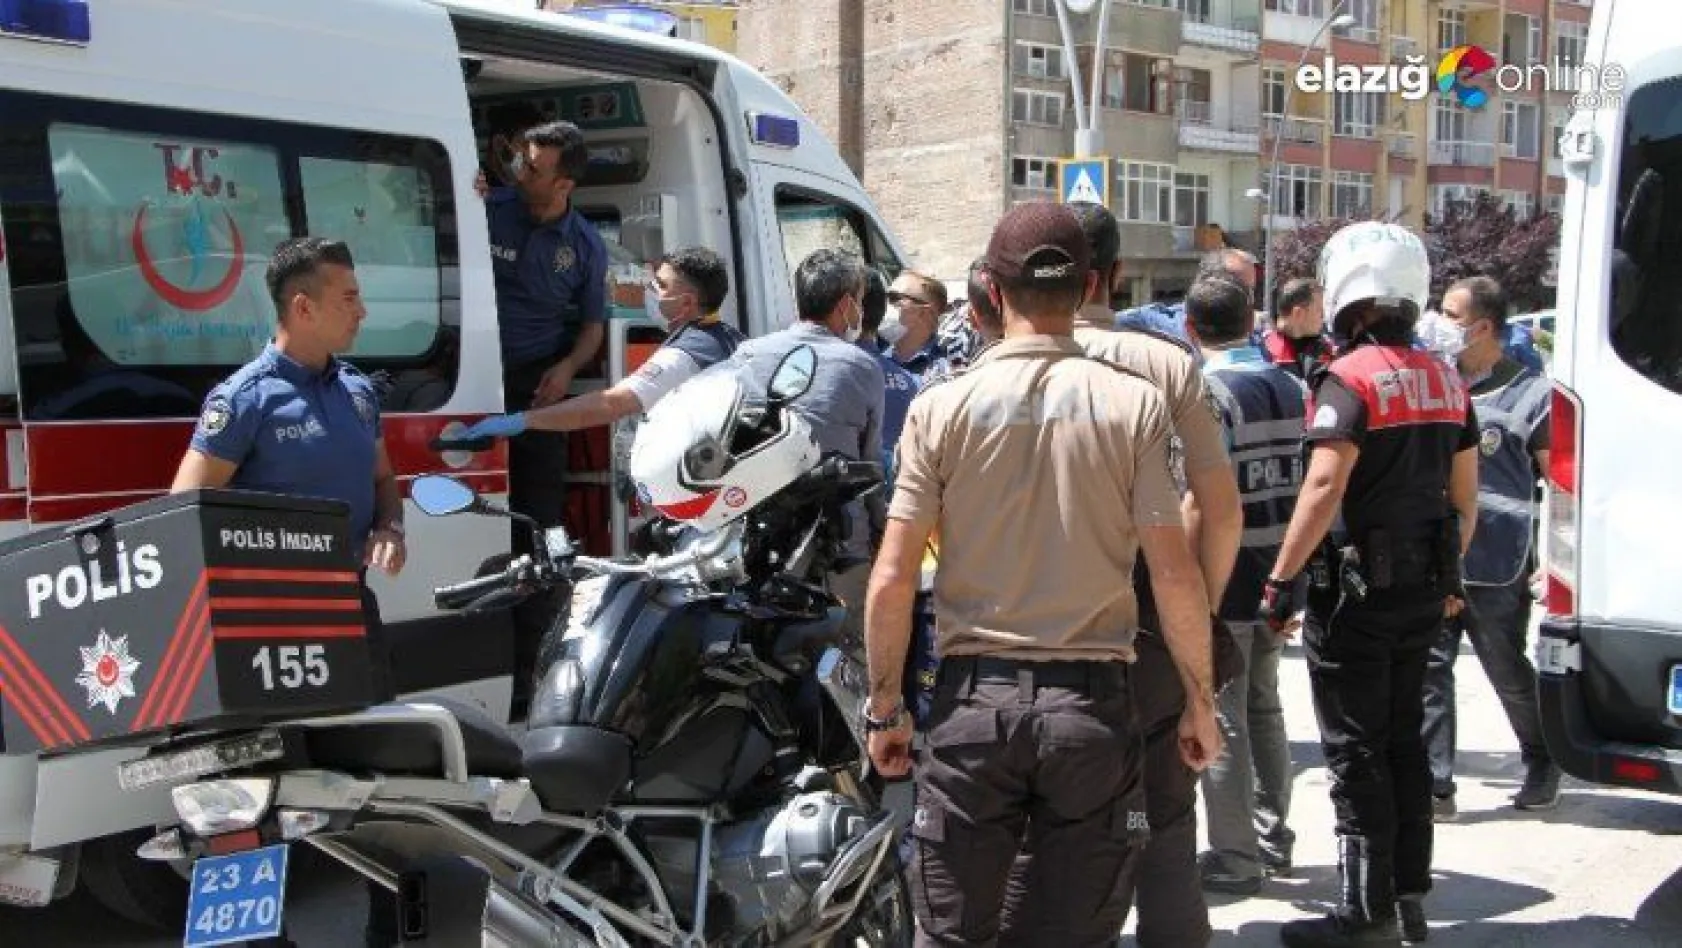 Elazığ'da maske tartışmasında, minibüs şoförü bıçaklandı